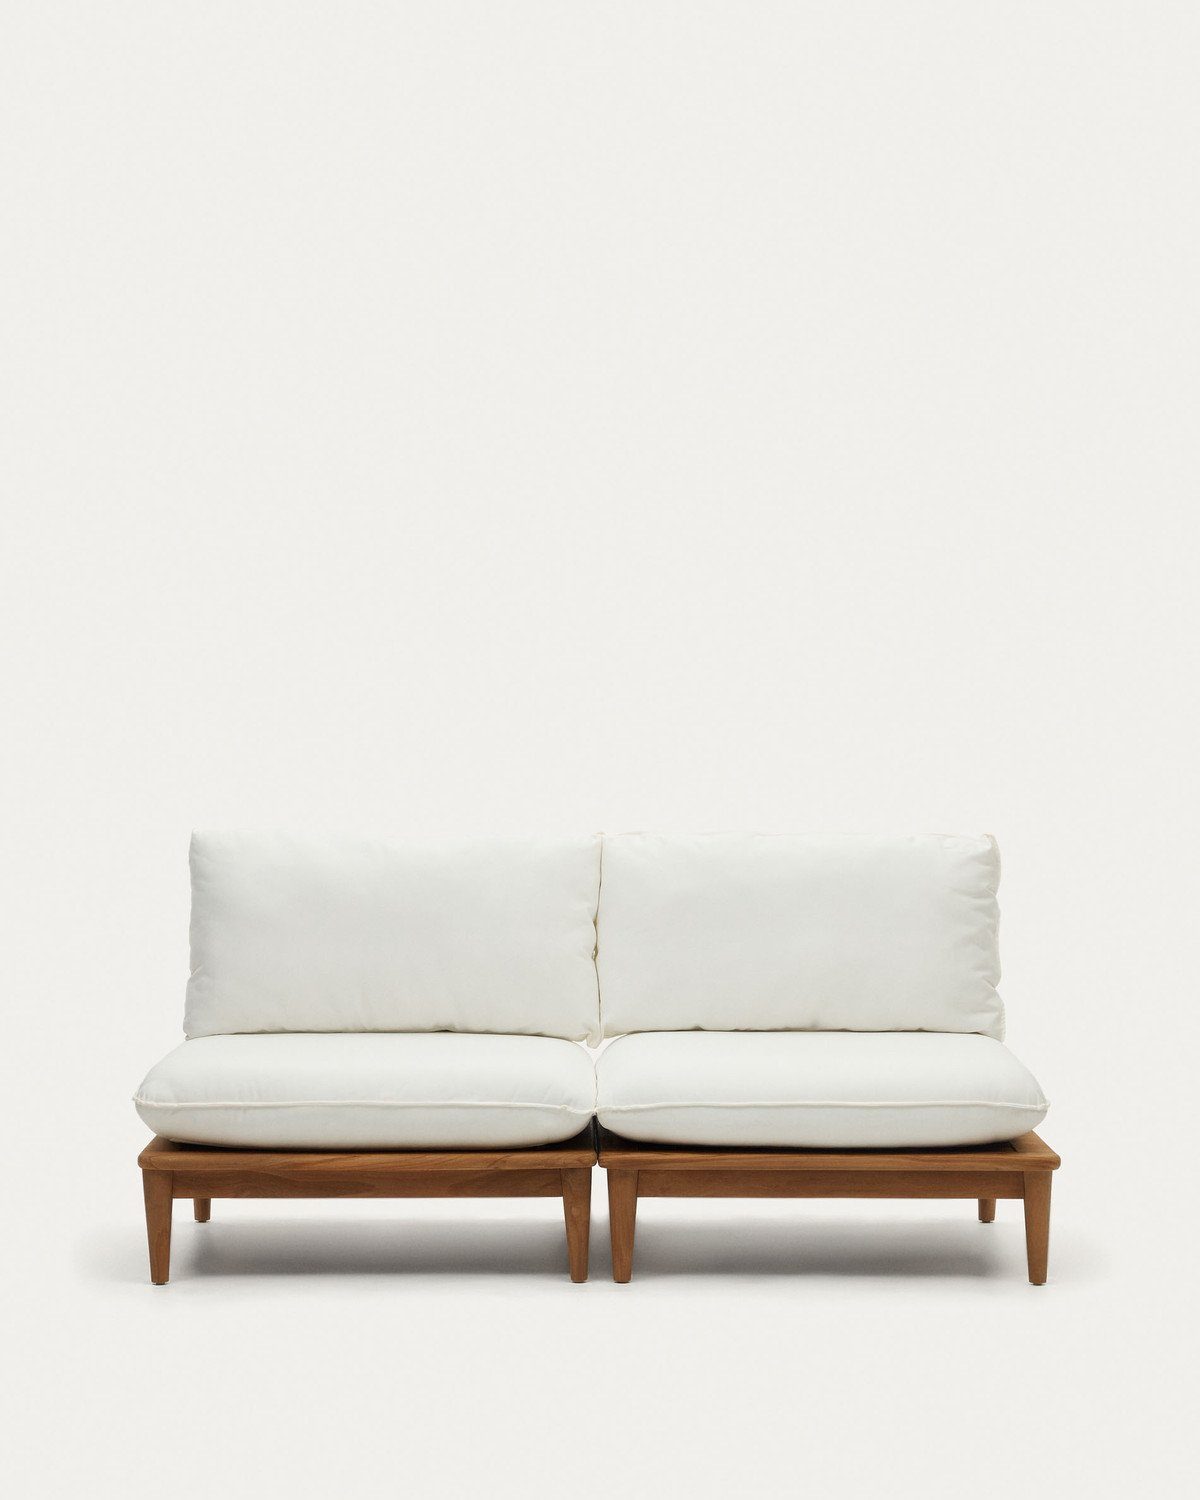 x aus 65 cm Sofa 90 Set Sesseln weiß 180 Natur24 x braun modularen Portitxol zwei